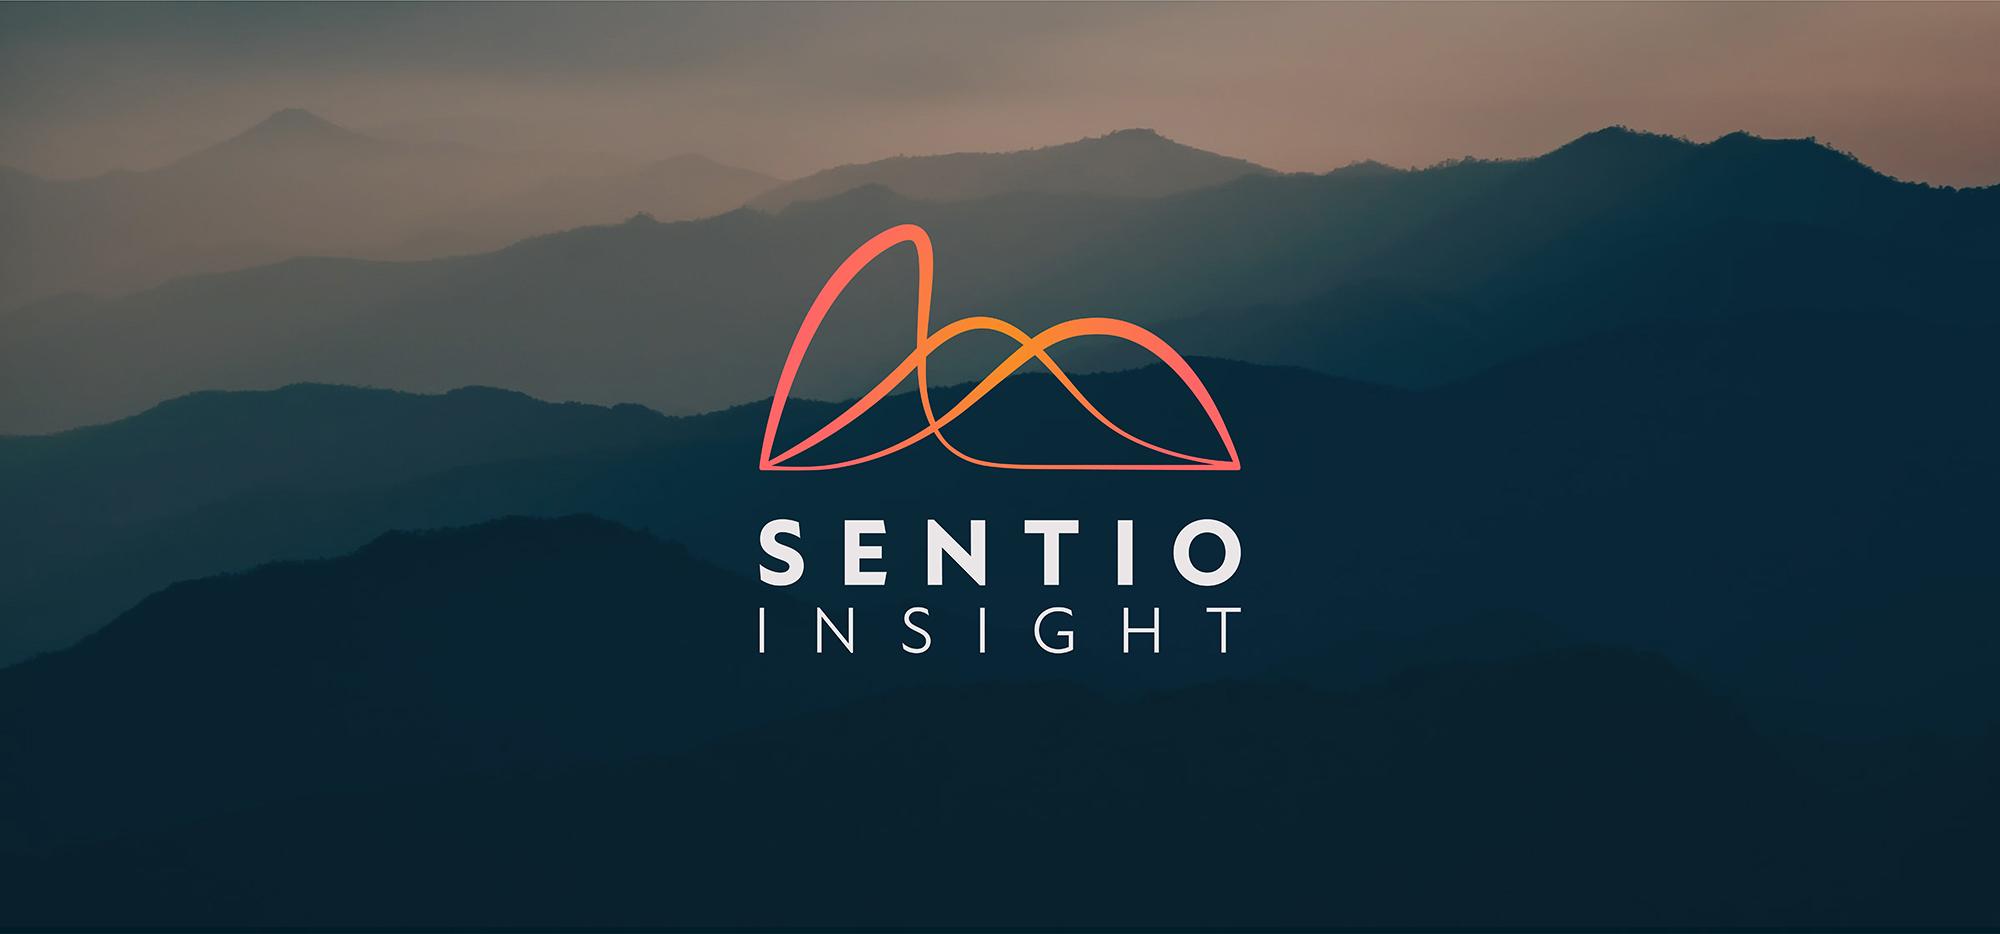 Rune & Berg Design Sentio Insight Pääkuva Uutinen